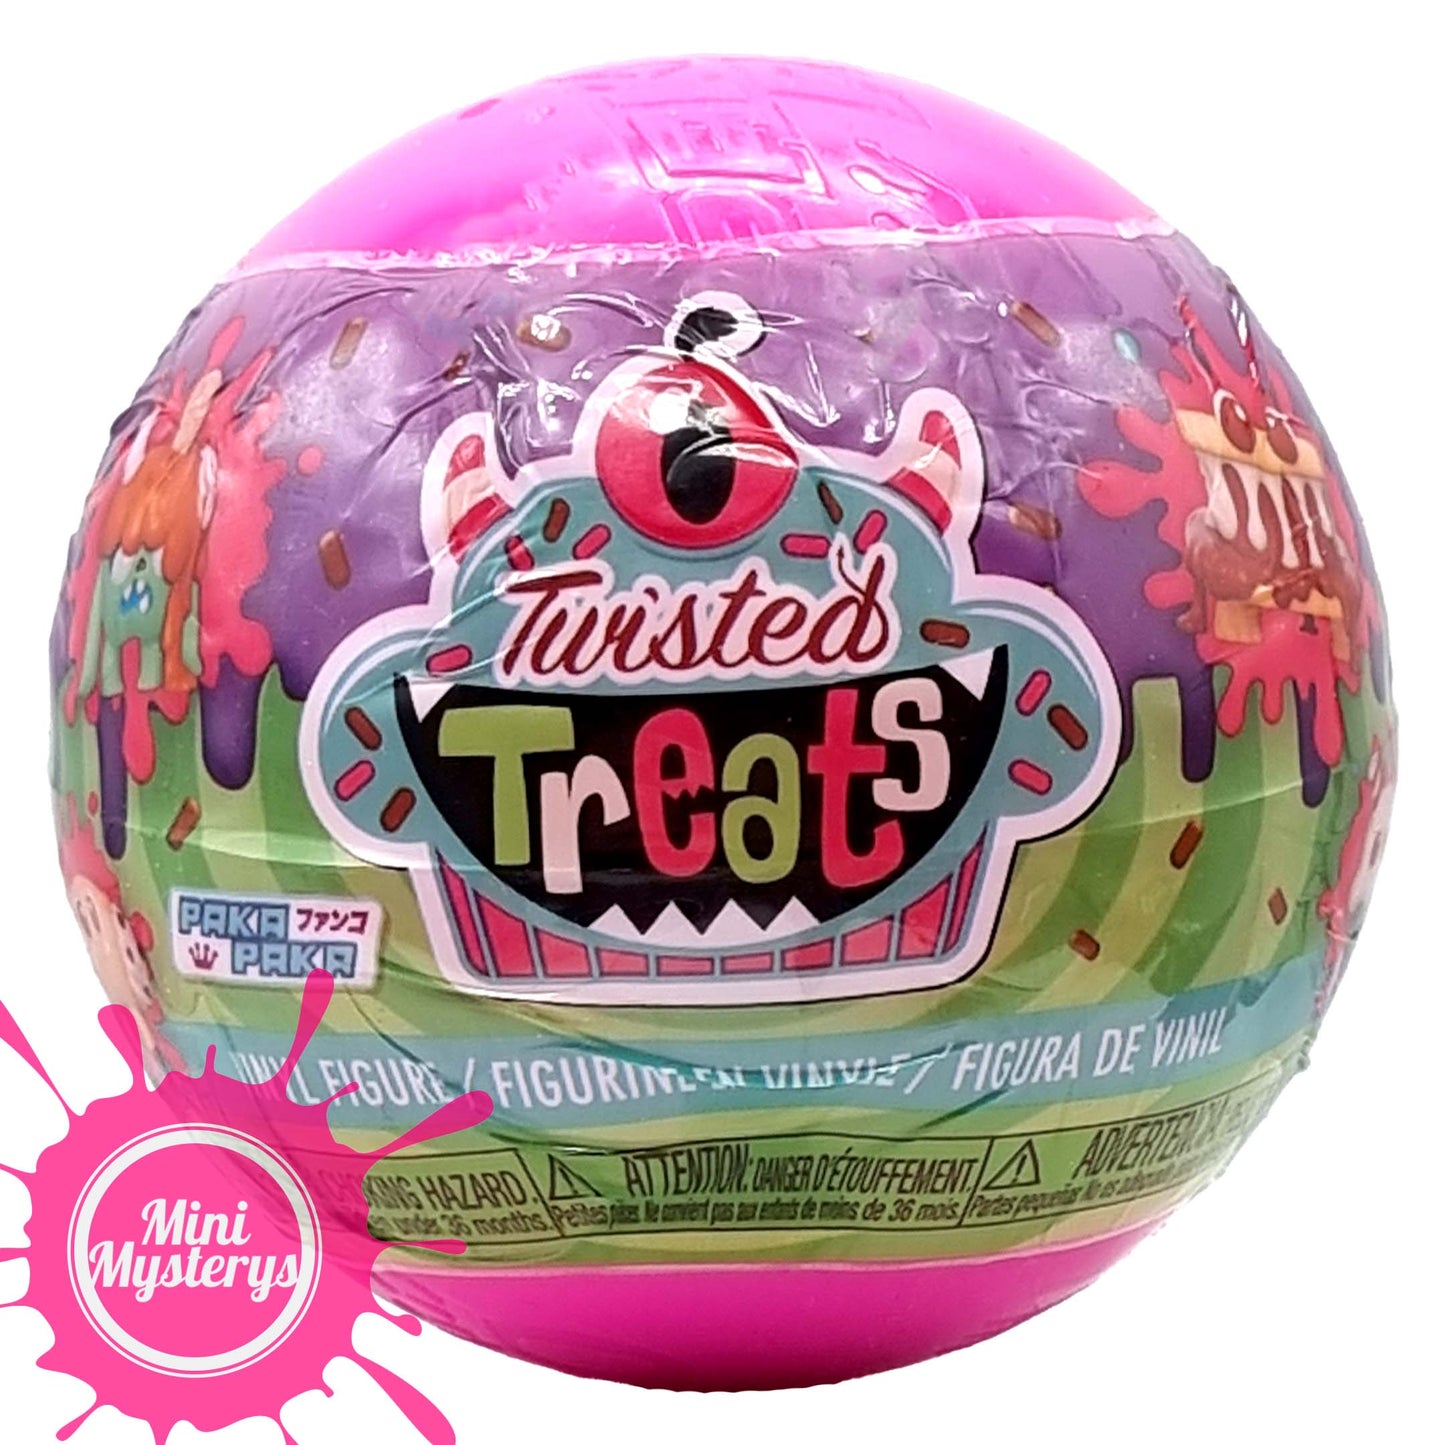 Mini Mysterys Boys Toy Bundle - 7 Toys inc Twisted Treats, Minions, Among Us, SuperThings, Gonkers (Boys Gift Ideas)